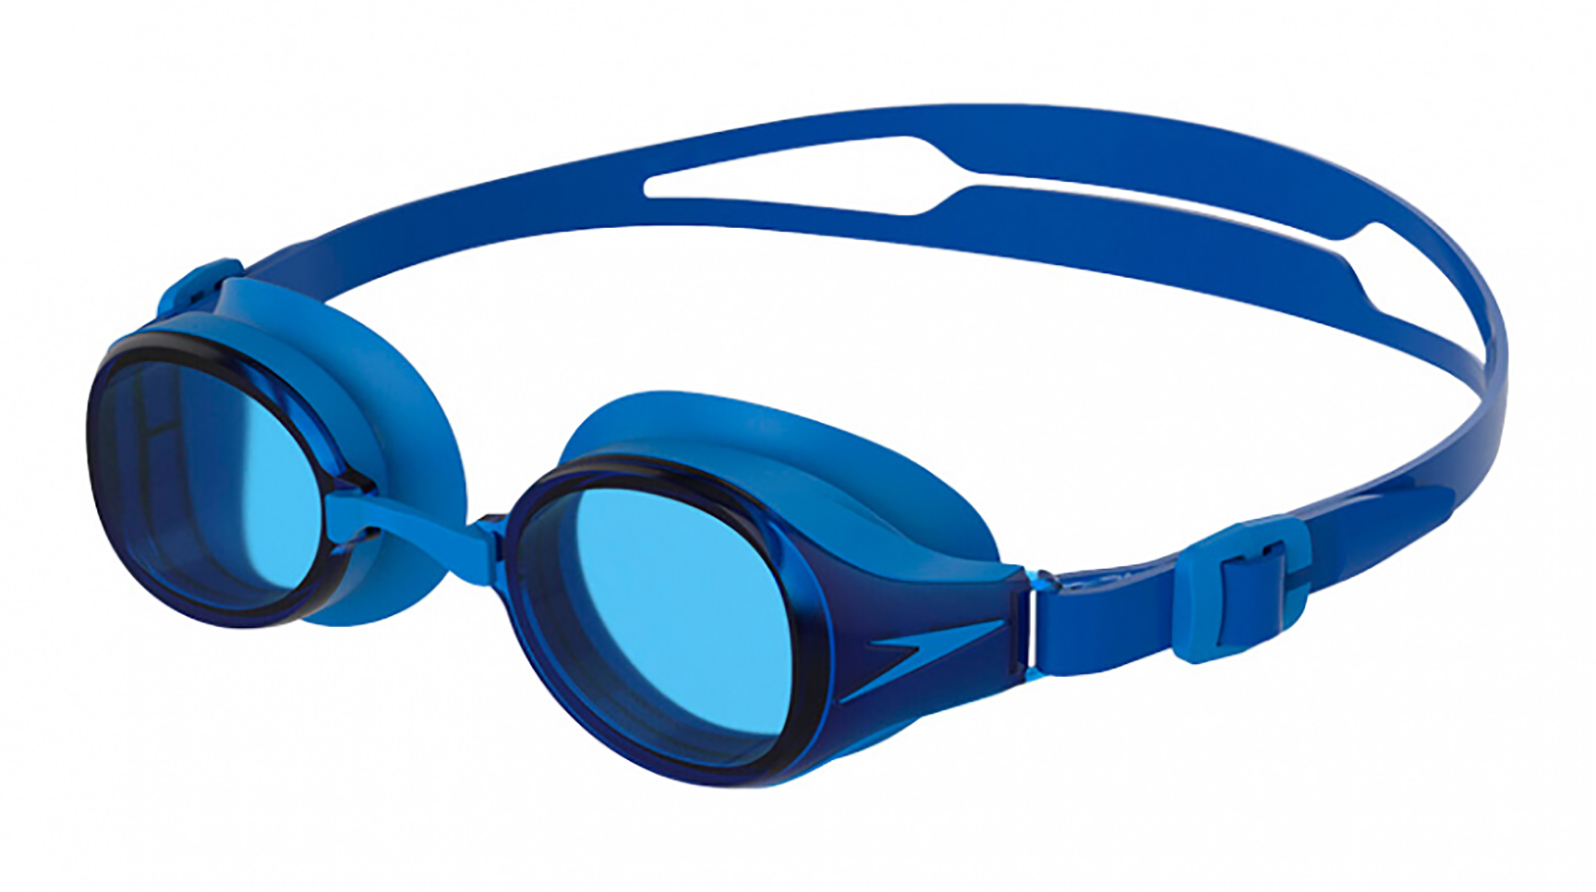 Speedo Очки для плавания Hydropure Optical F809 -3,5 speedo очки для плавания hydropure optical f809 4 5